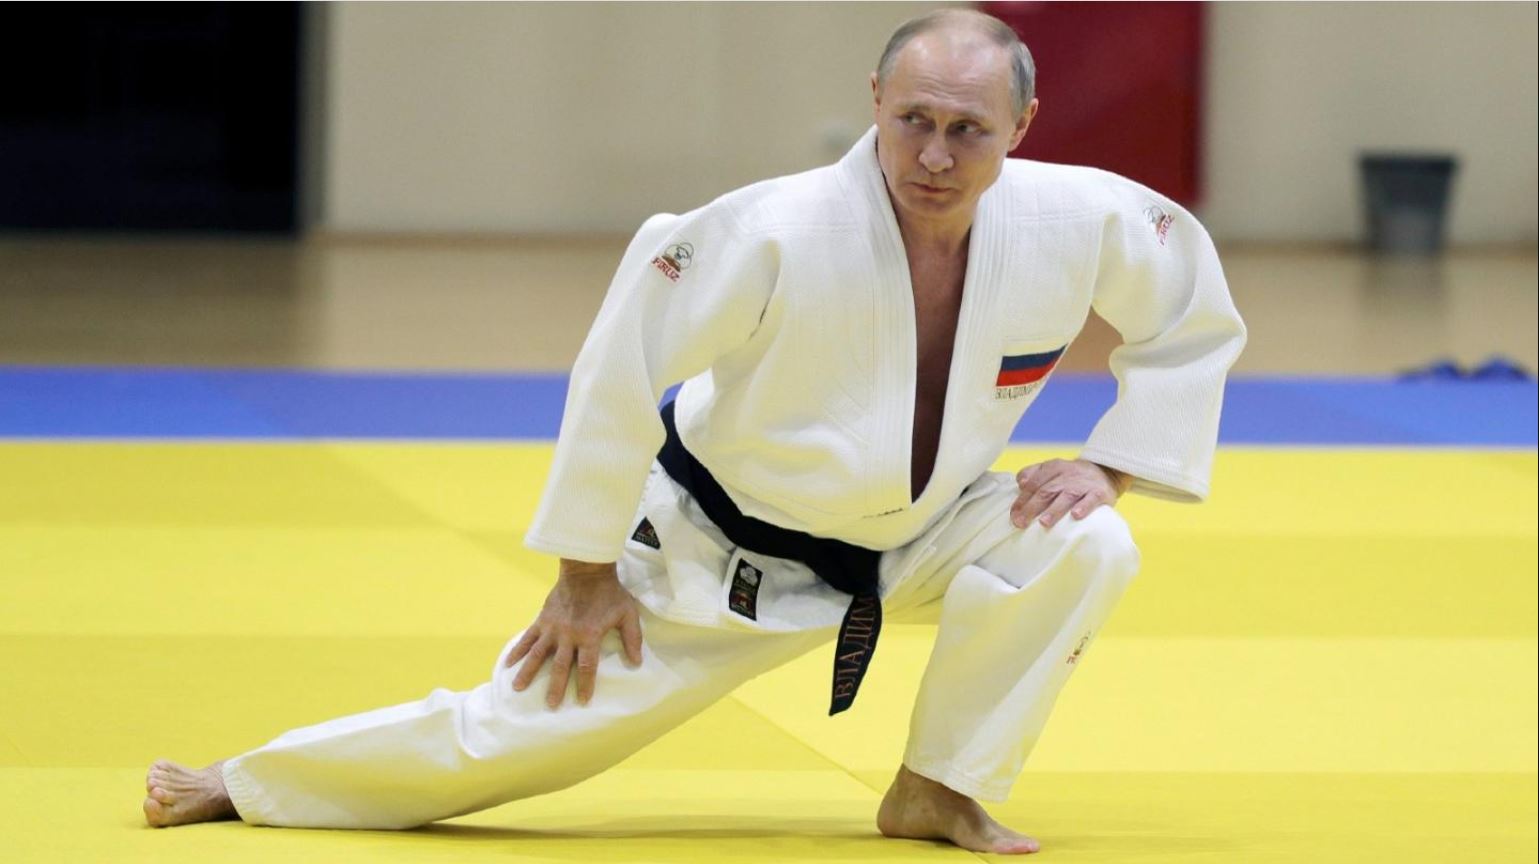 Putin took off his black belt during a taekwondo match